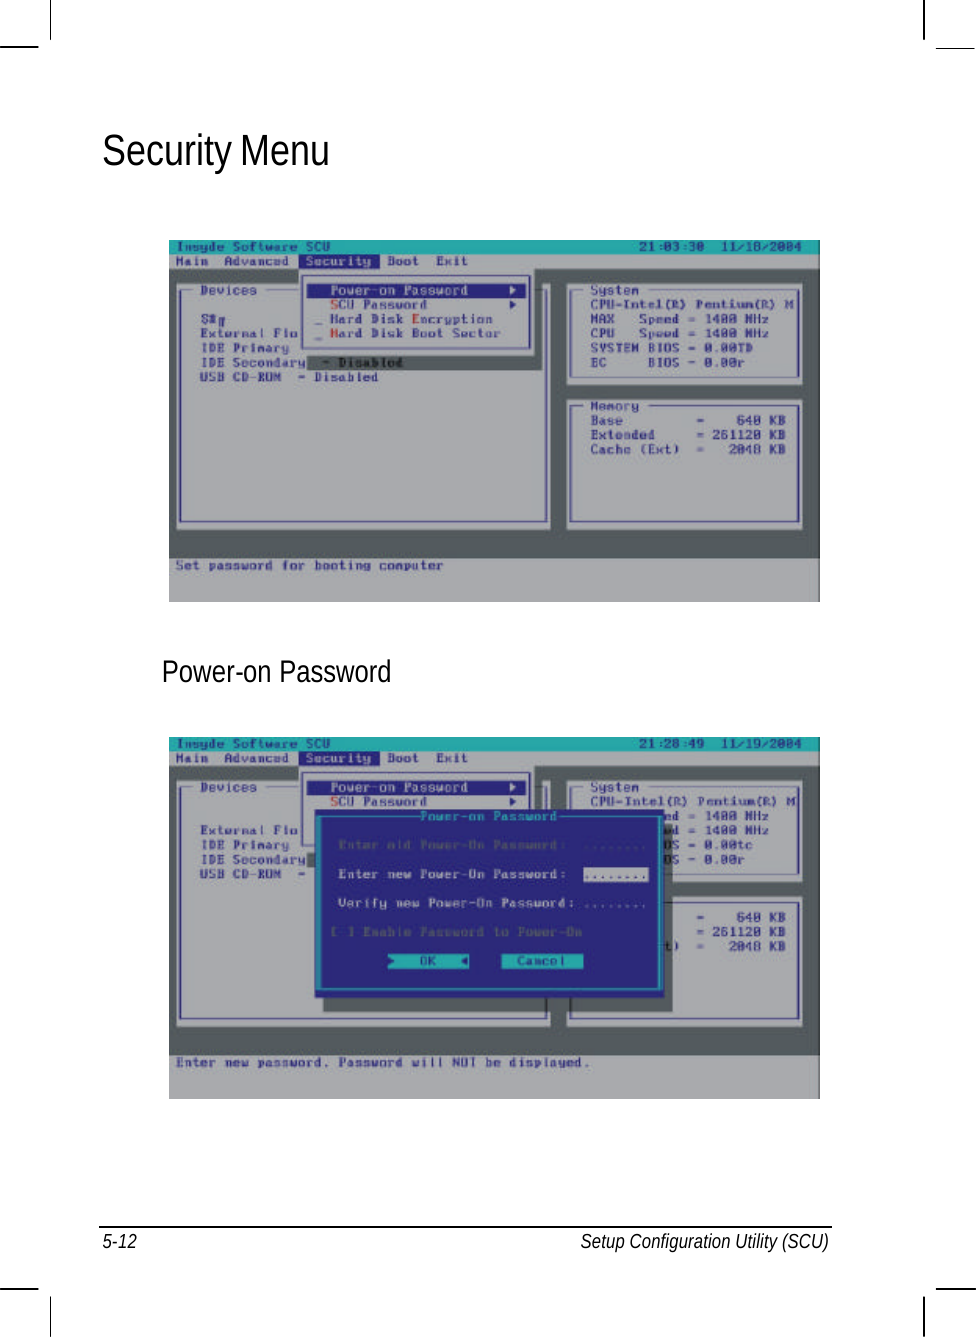  5-12 Setup Configuration Utility (SCU) Security Menu  Power-on Password   